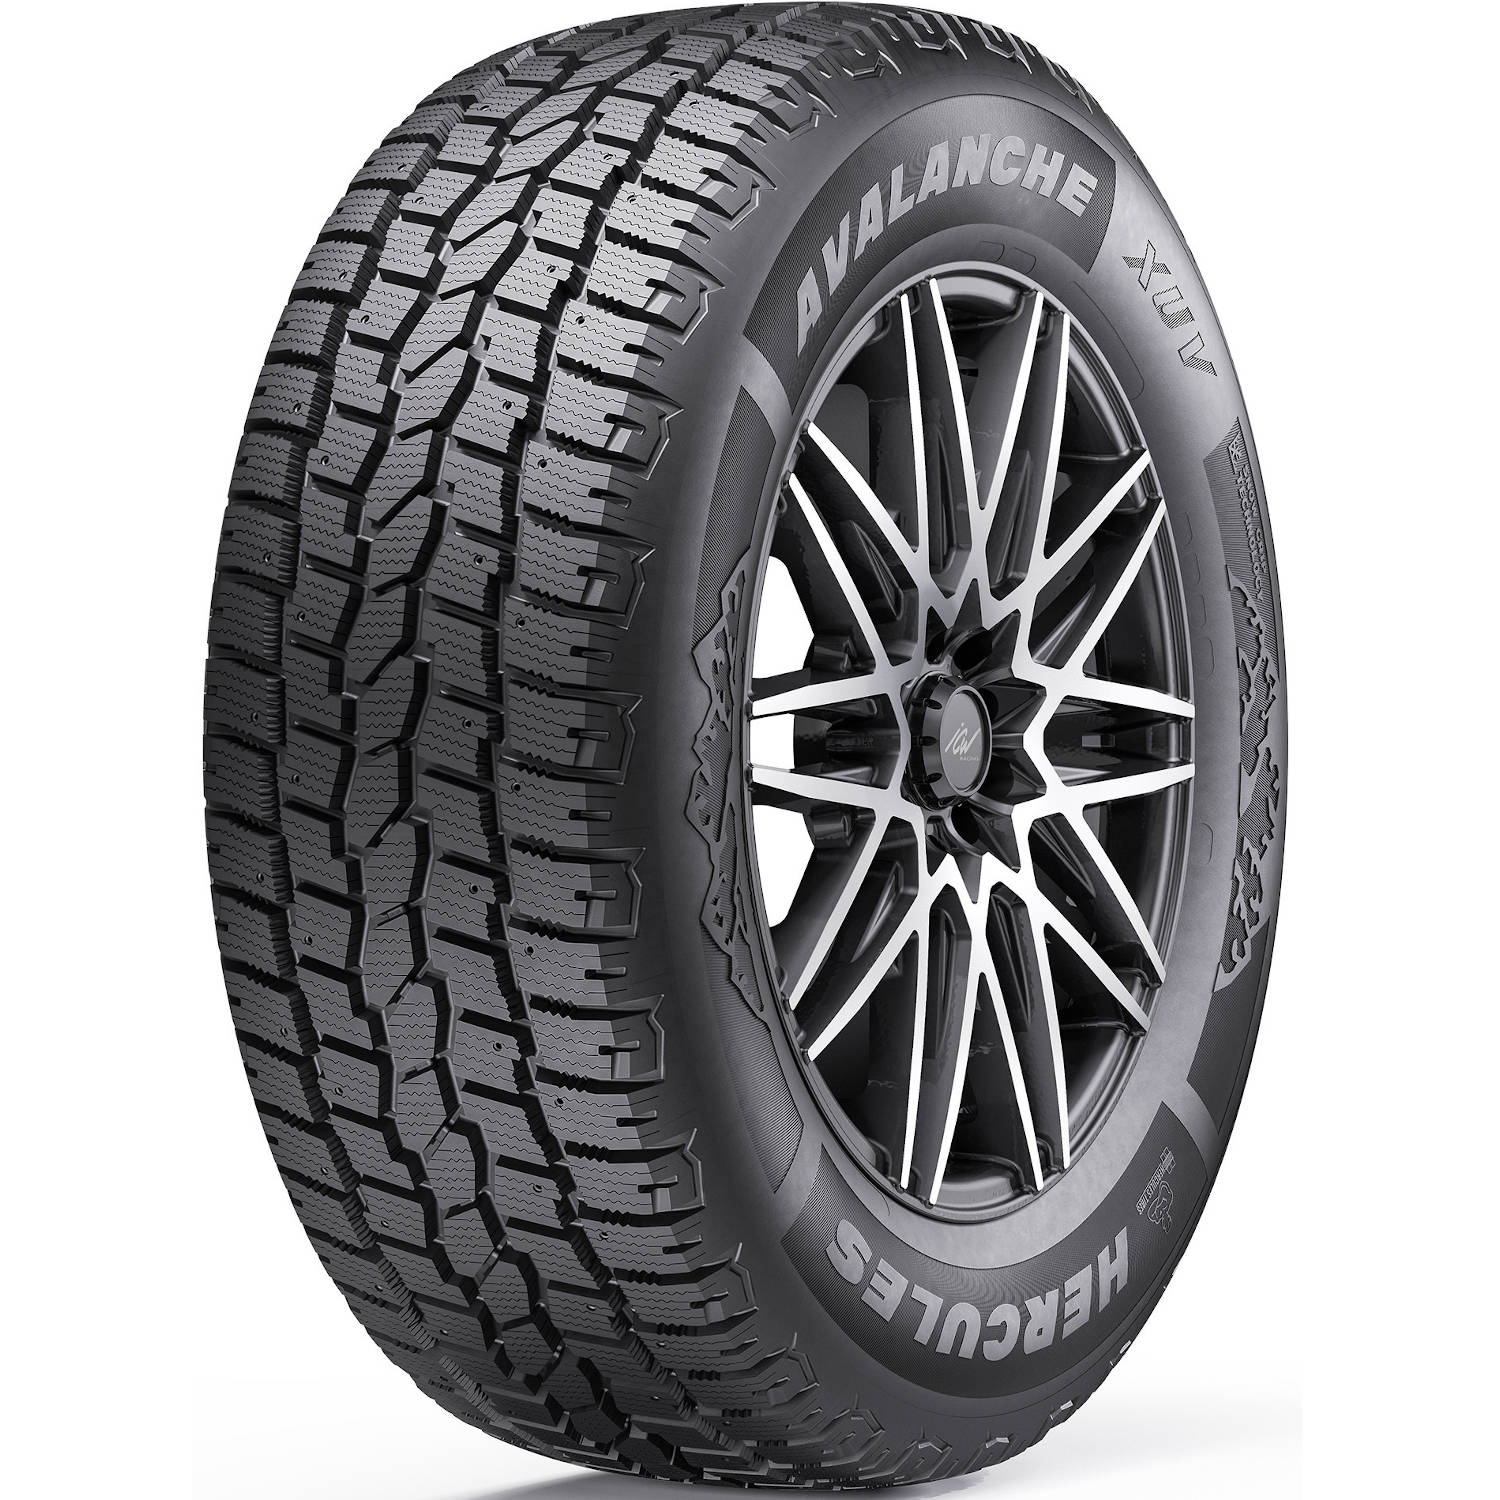 HERCULES AVALANCHE XUV 265/60R18 (30.5X10.4R 18) Tires